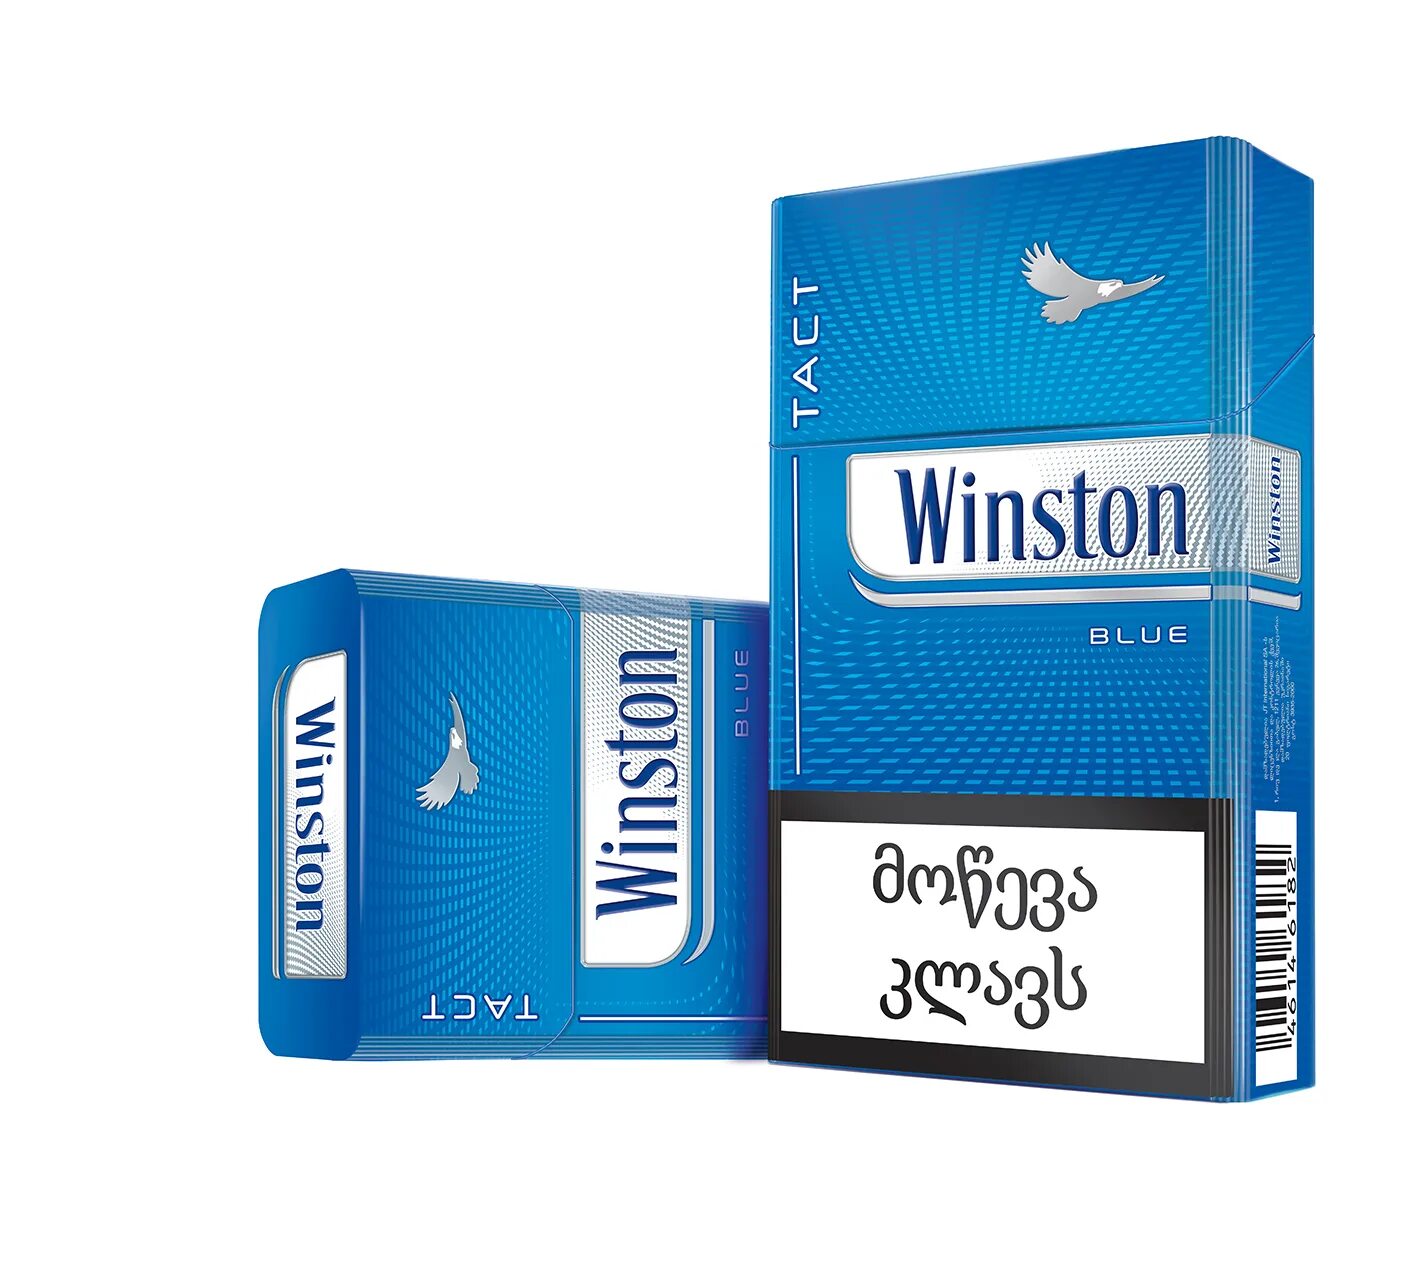 Winston XS Compact. Винстон синий компакт 100. Сигареты Винстон тонкие синие. Винстон компакт блю